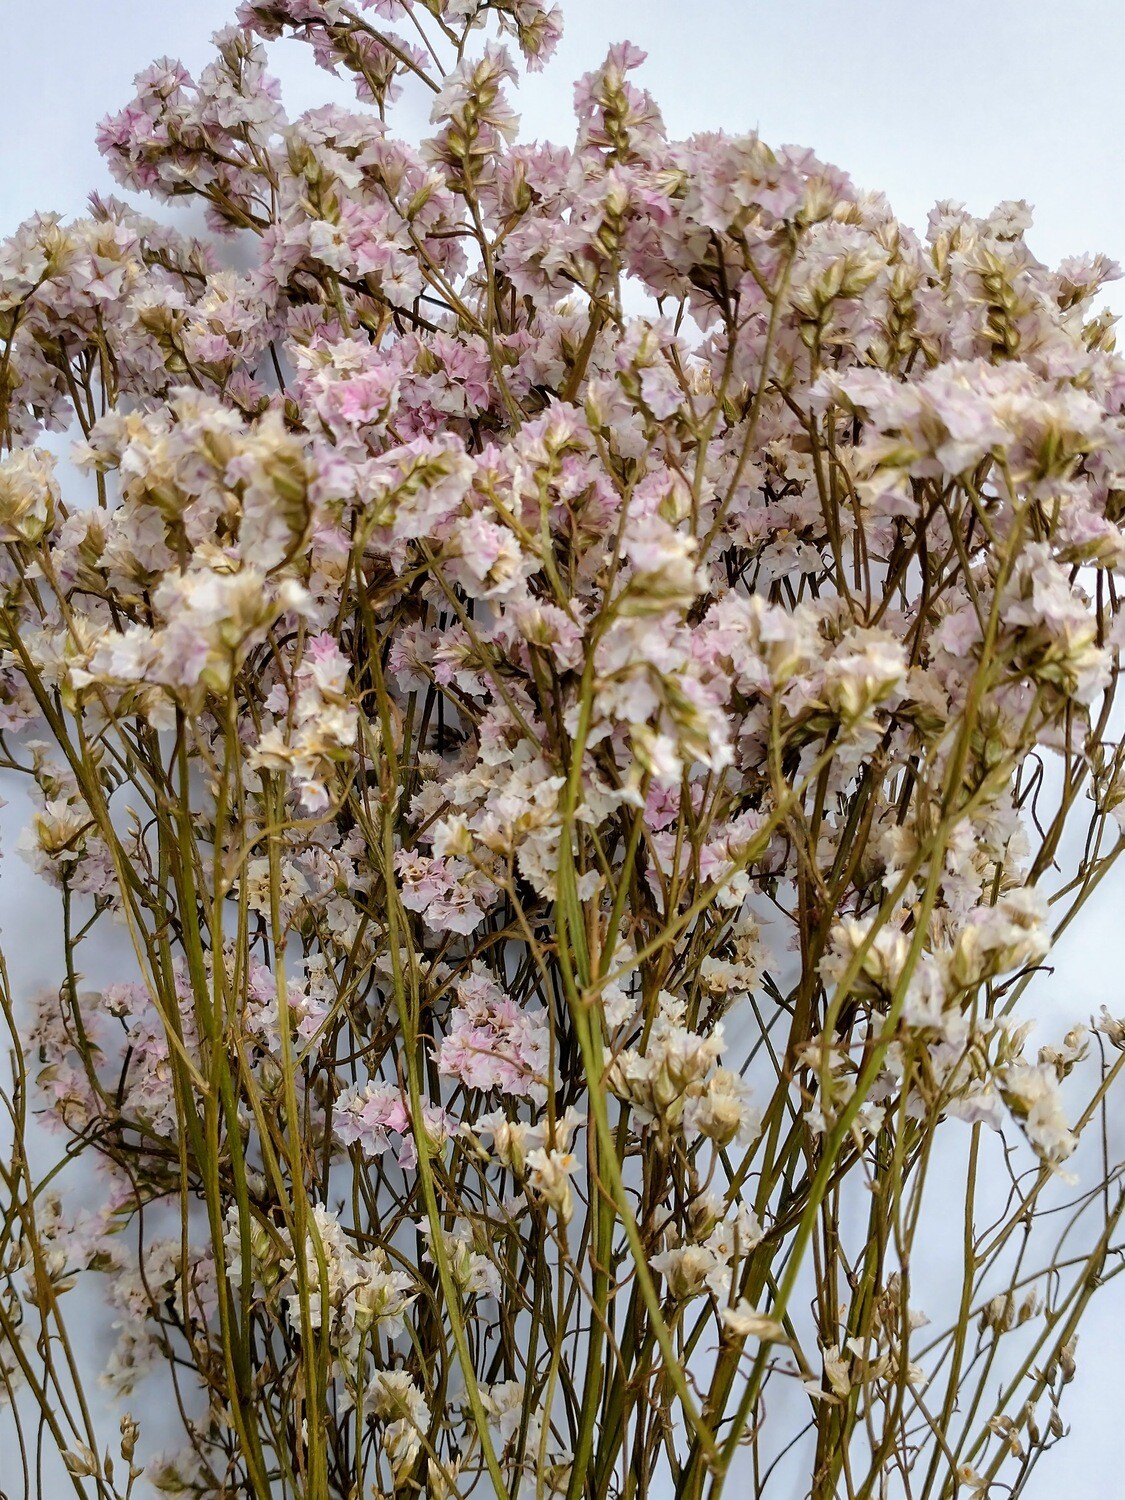 Sea lavender pale pink - dry Limonium sinensis 5 stems